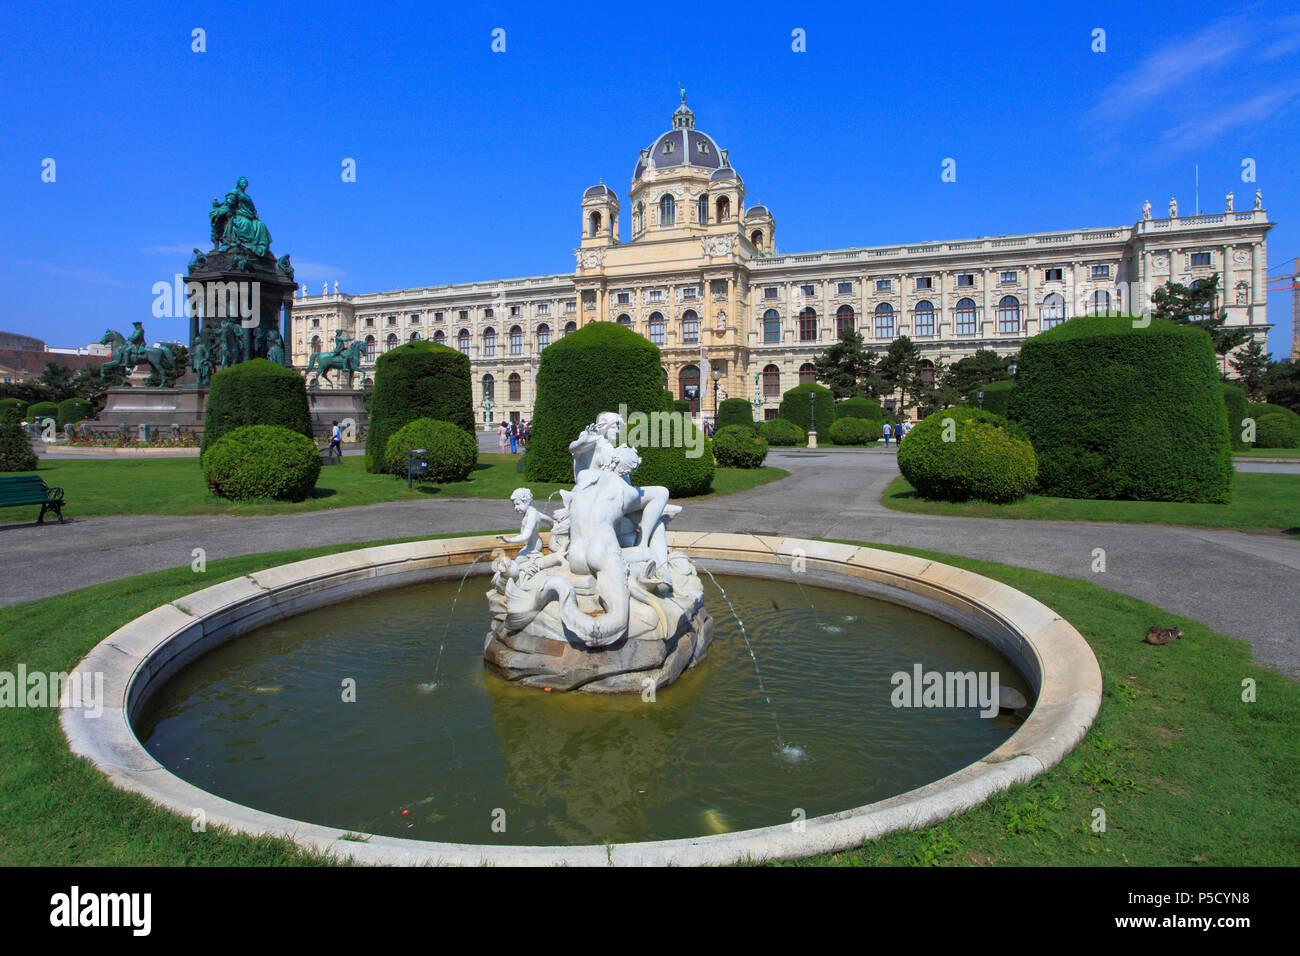 Austria, Vienna, Natural History Museum, Maria Theresien Platz, fountain, statue, Stock Photo